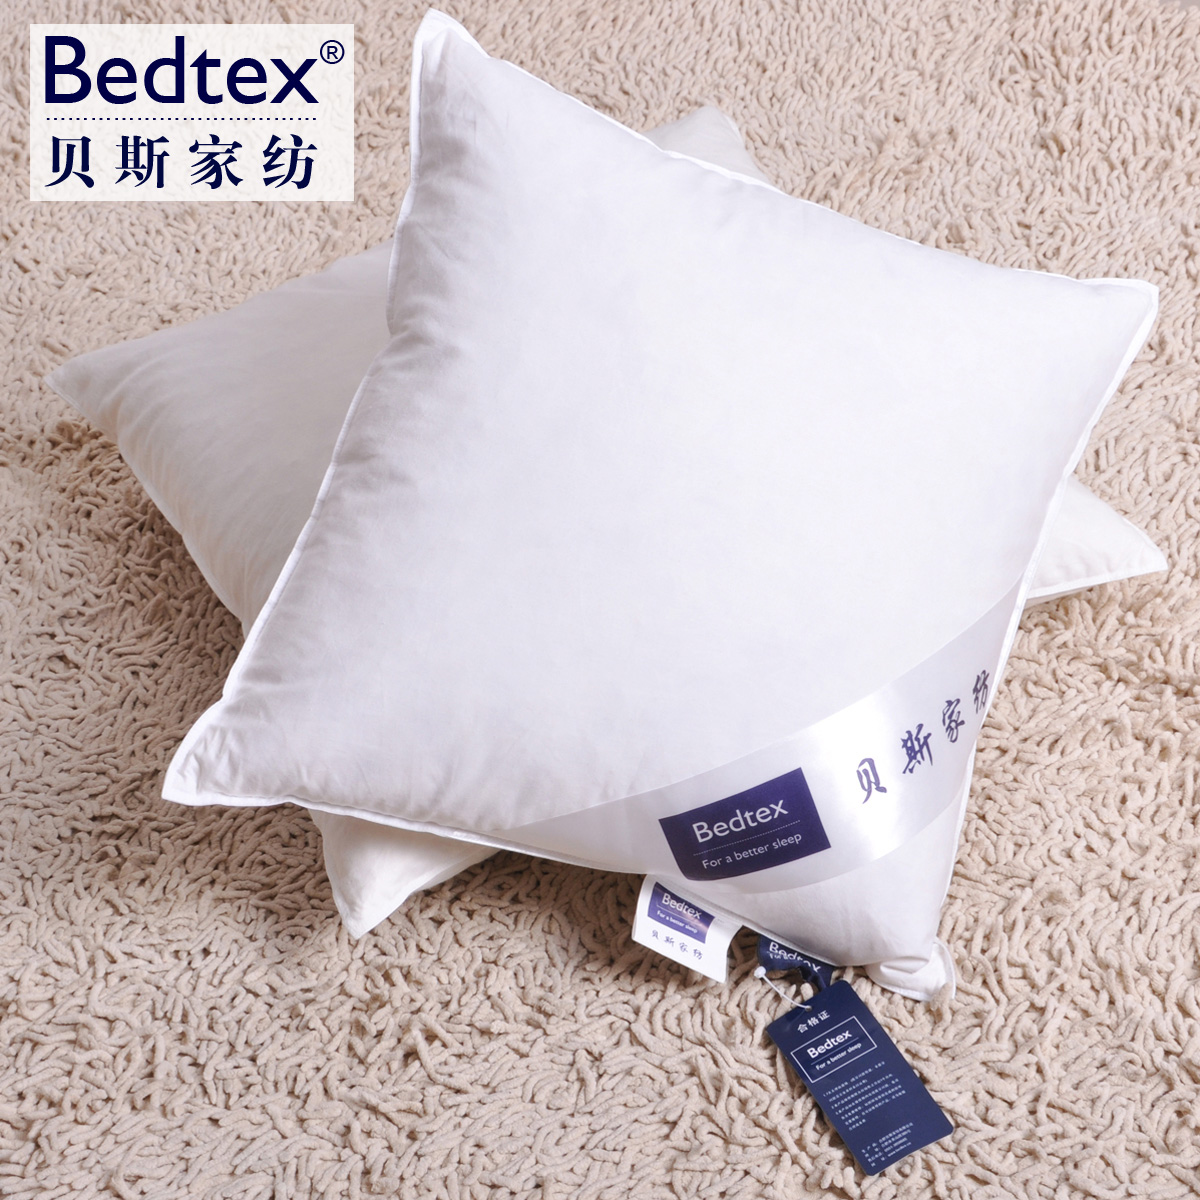 Bedtex 靠垫30%白鸭羽绒靠枕 可爱抱枕芯 汽车腰靠垫 沙发靠垫